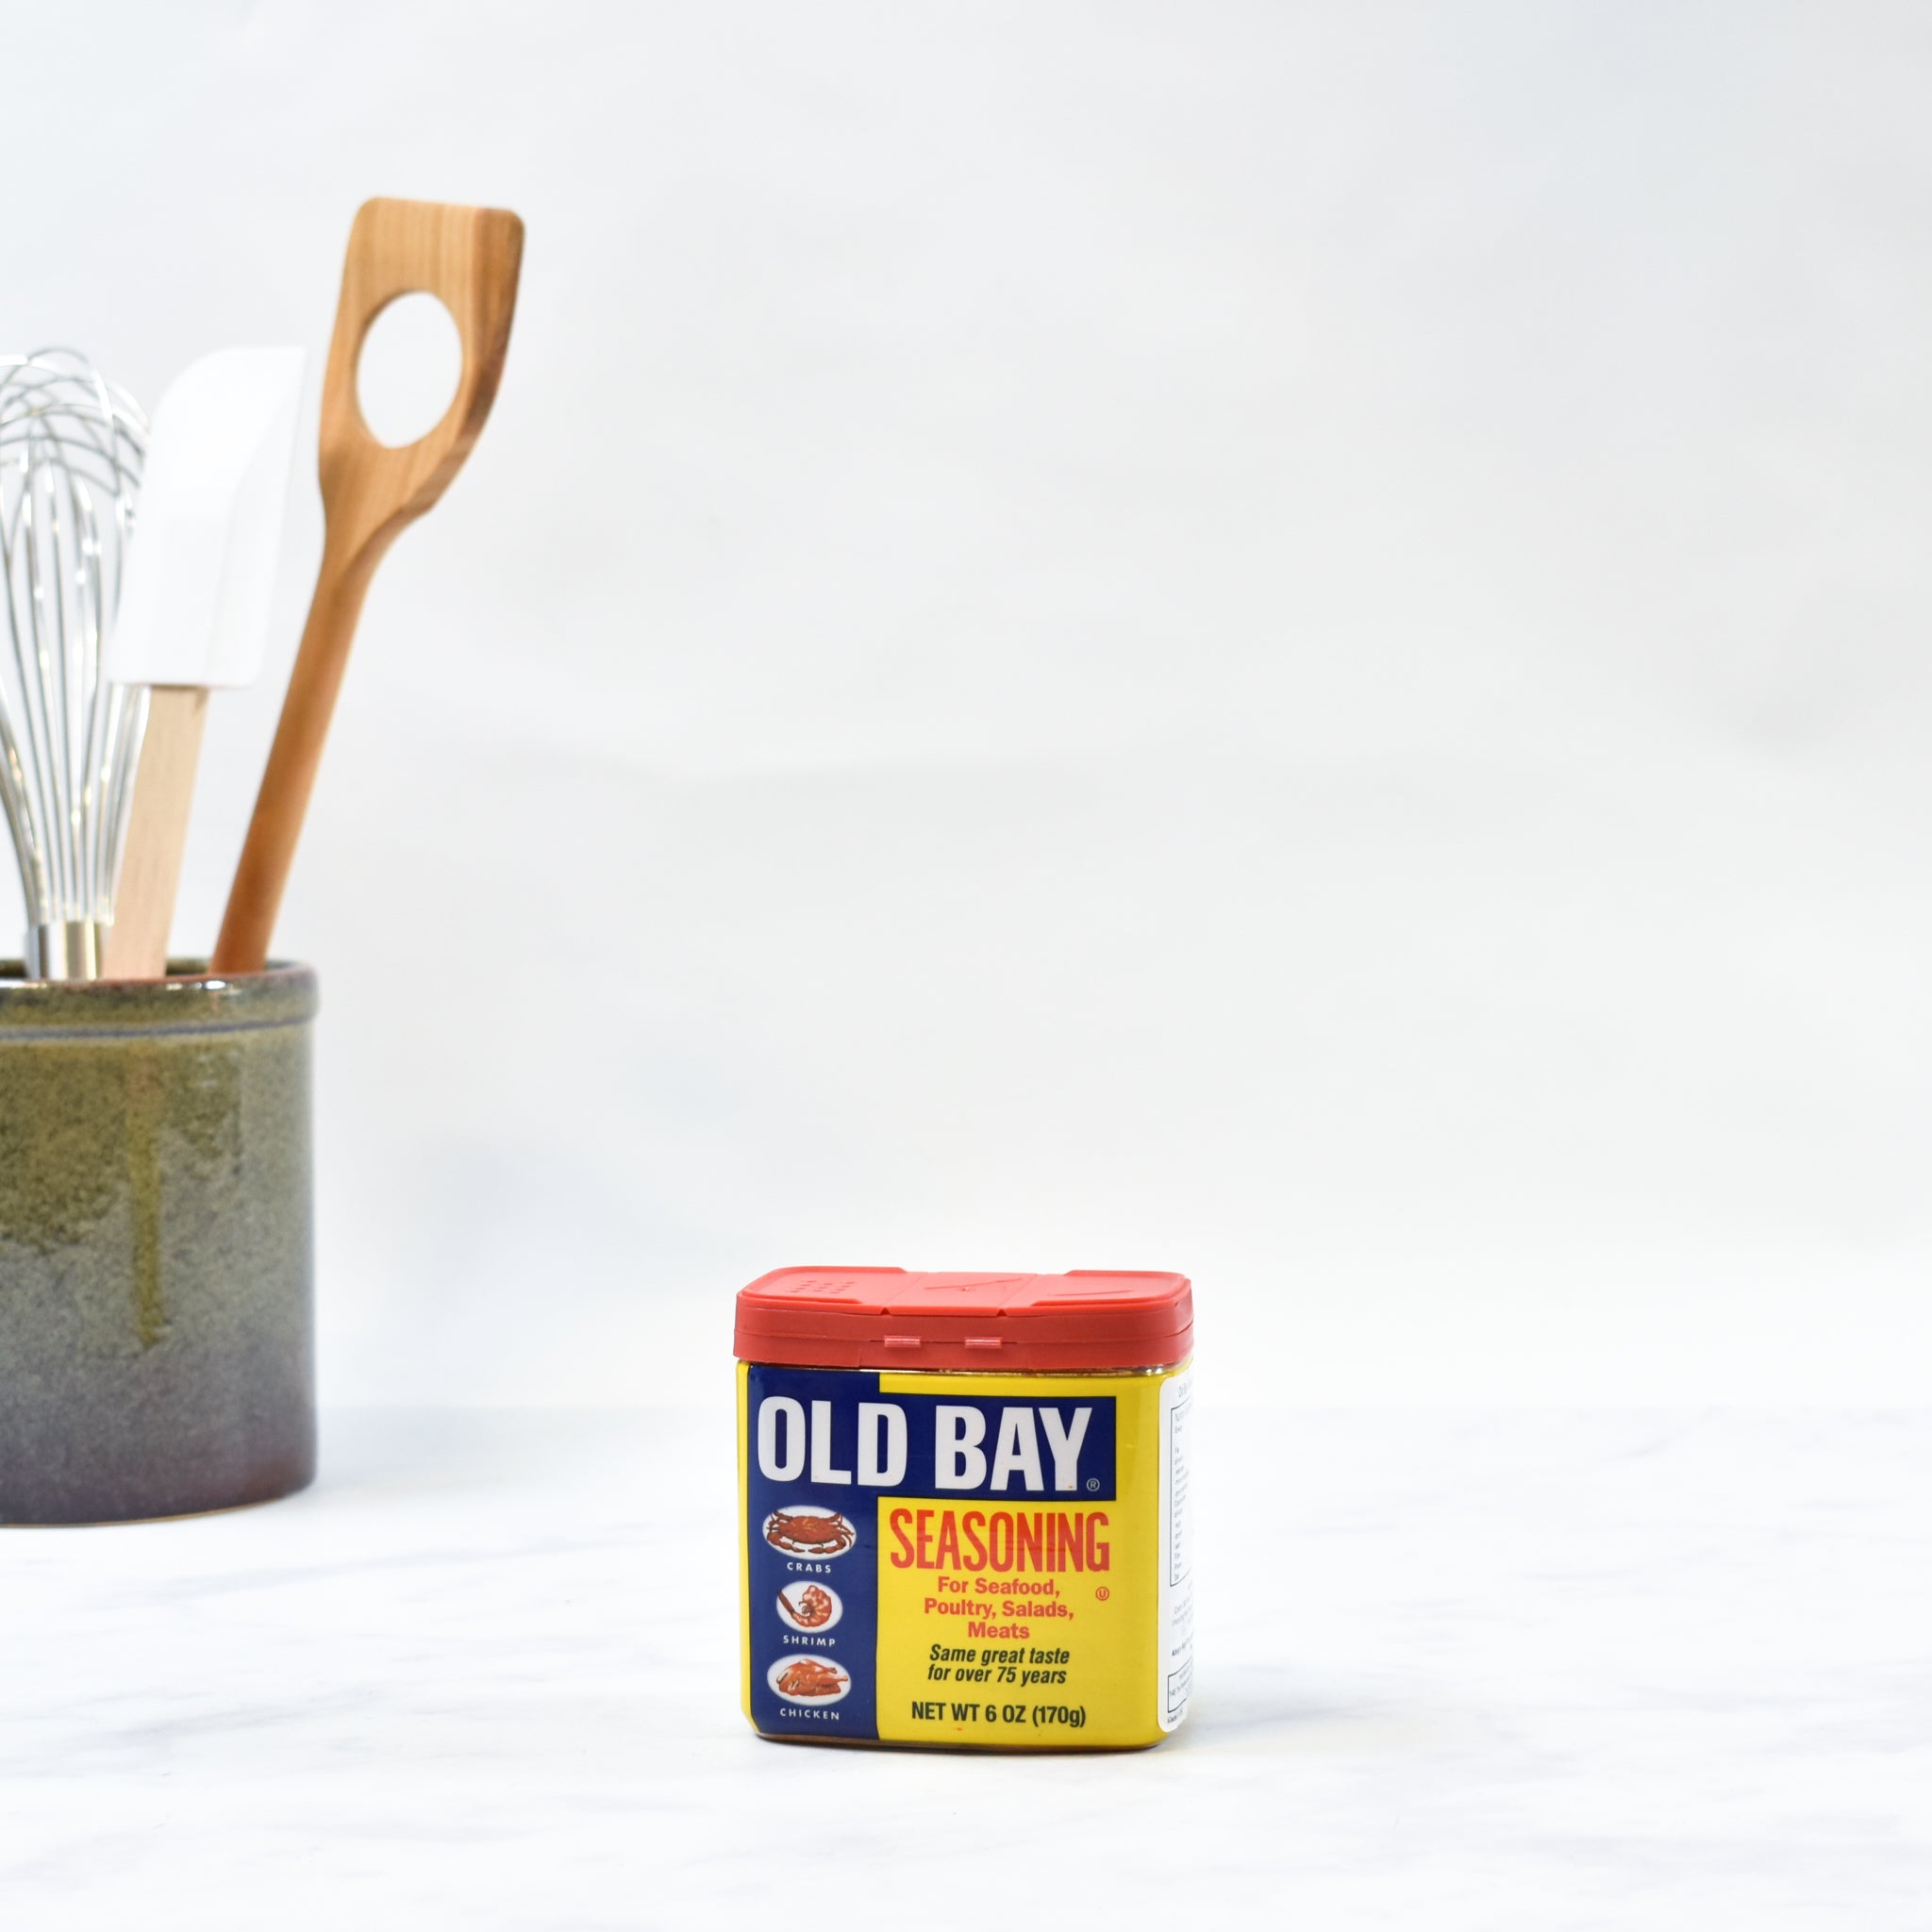 Old Bay Seasoning 170g